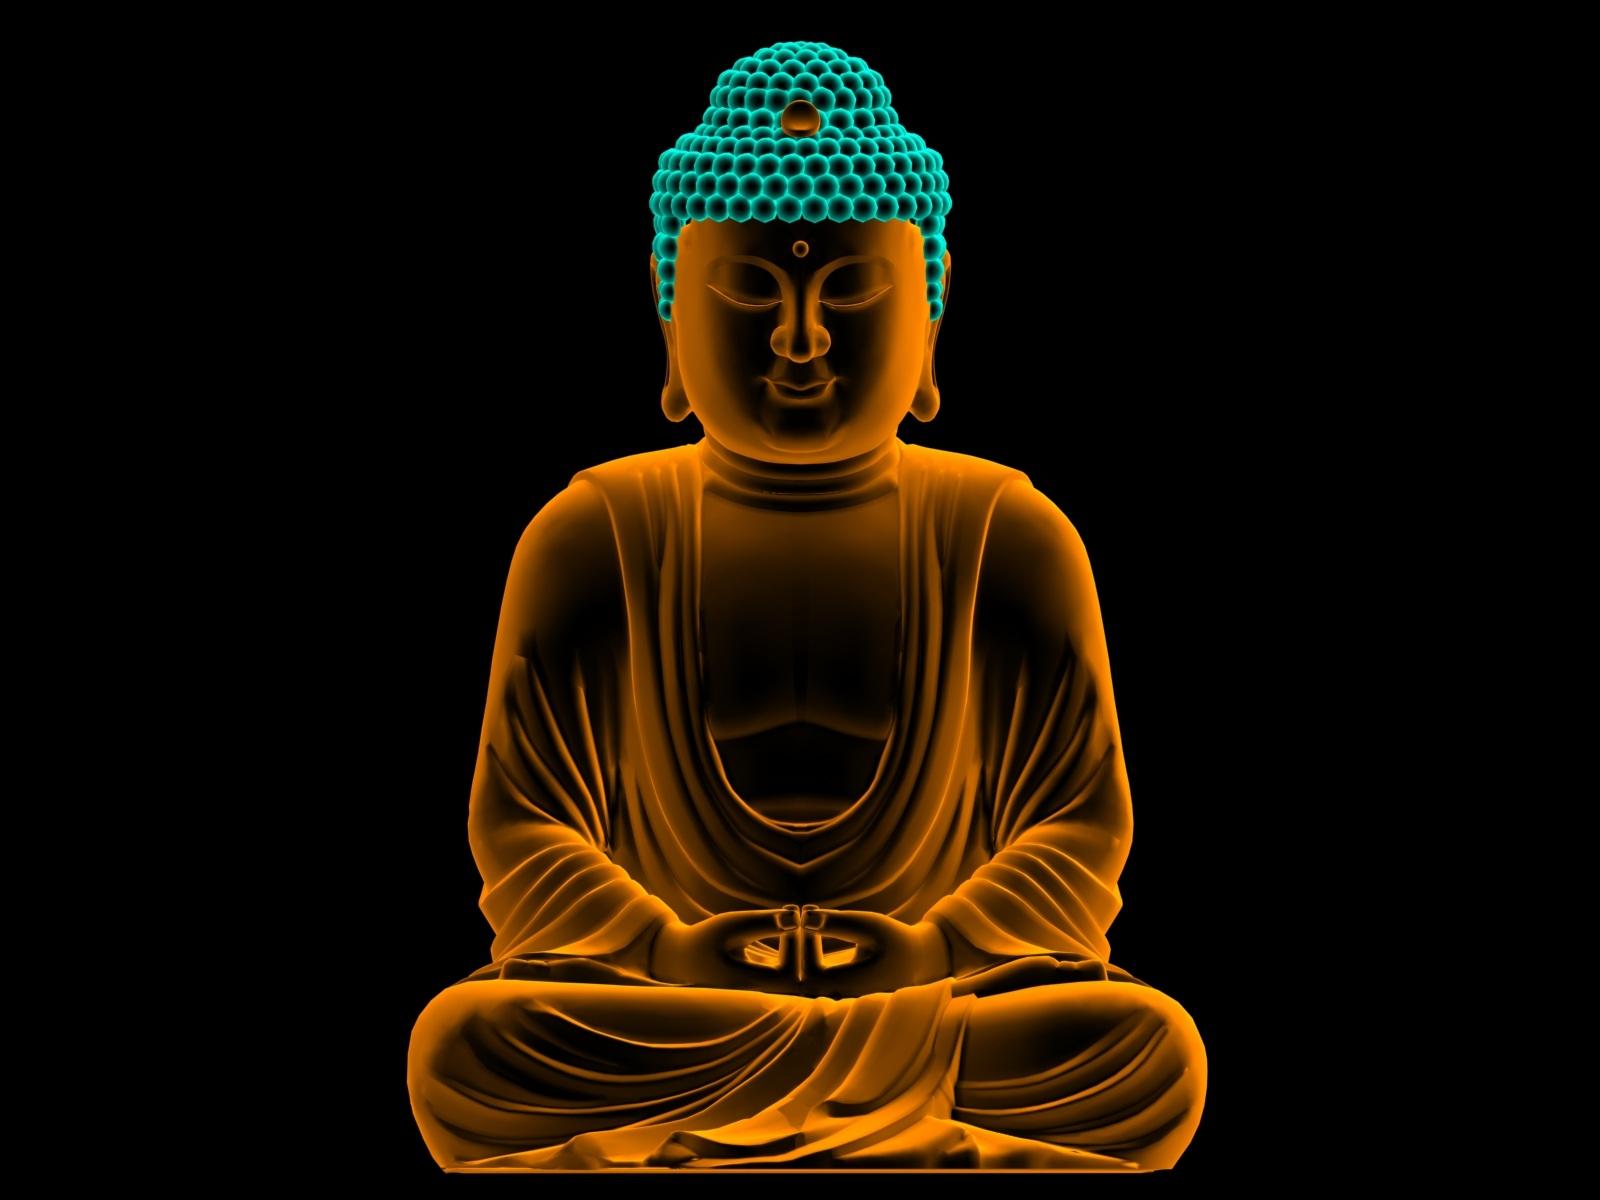 Lord Buddha Wallpaper HD